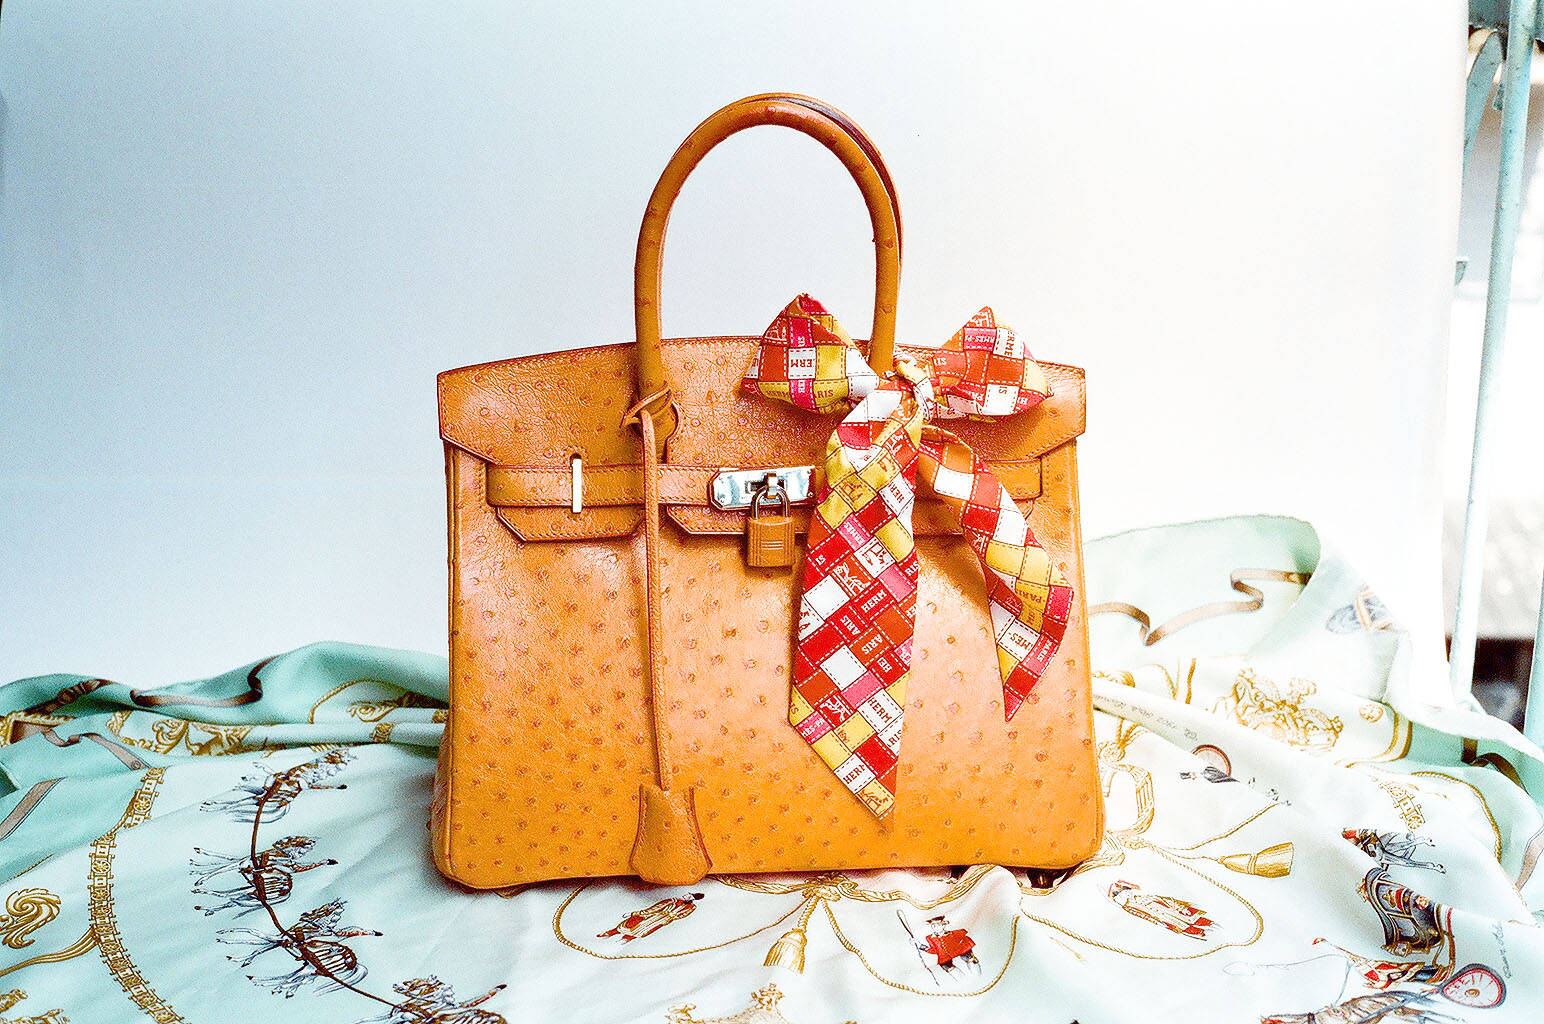 London: Hermes Birkin handbag sells for over USD 2 million